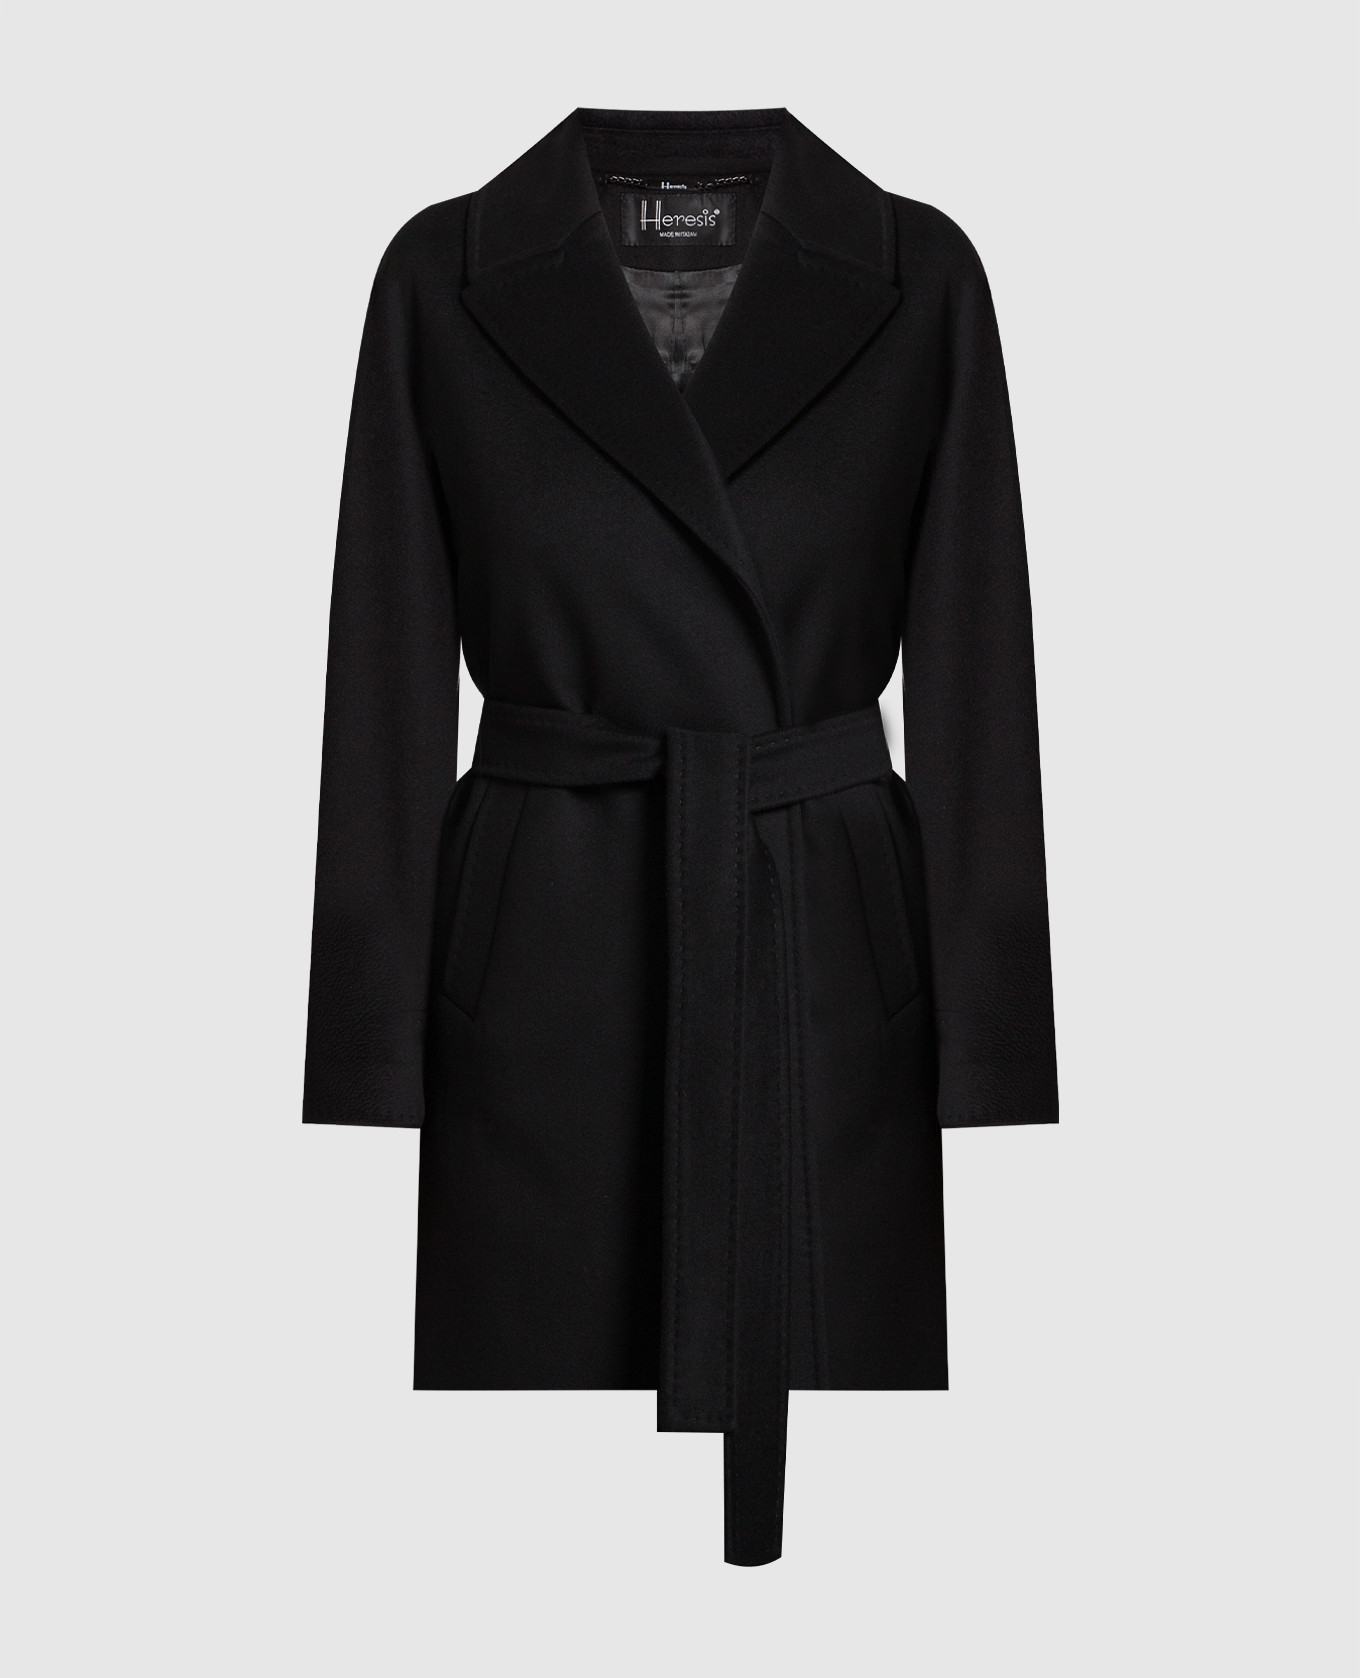 Black coat made of wool